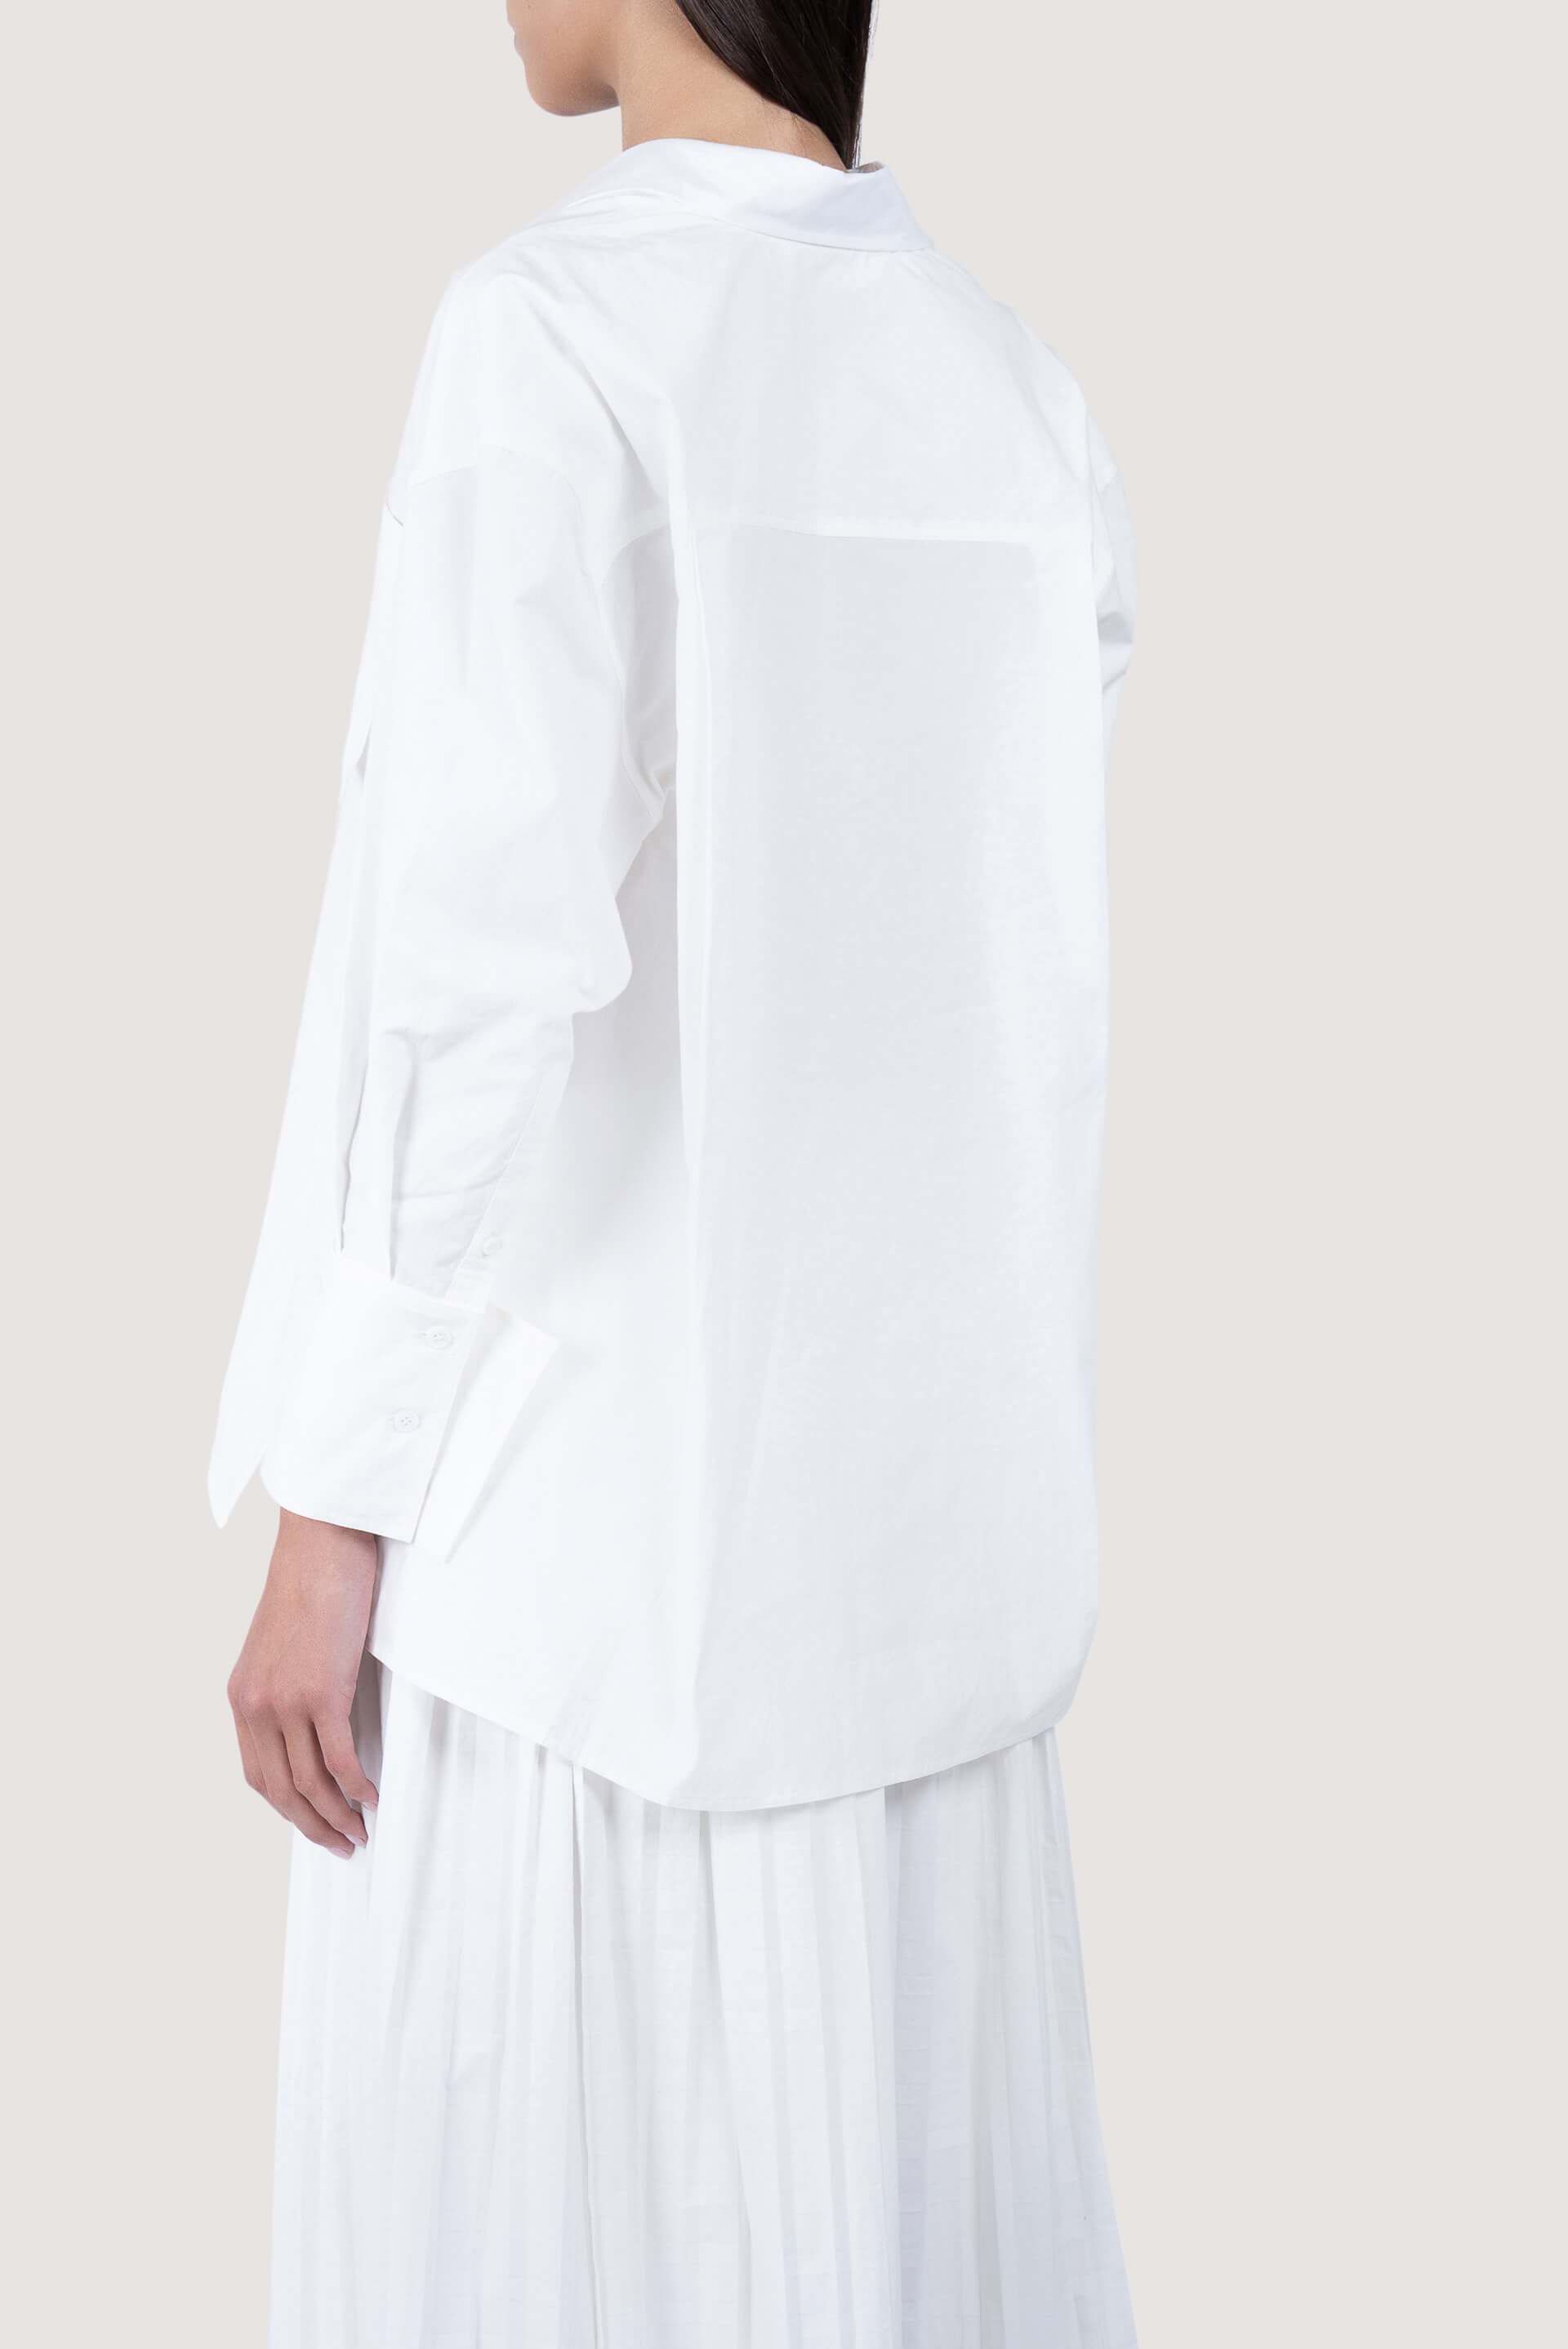 LVIR - Linen and Cotton Jacket - Size: S; Color: White